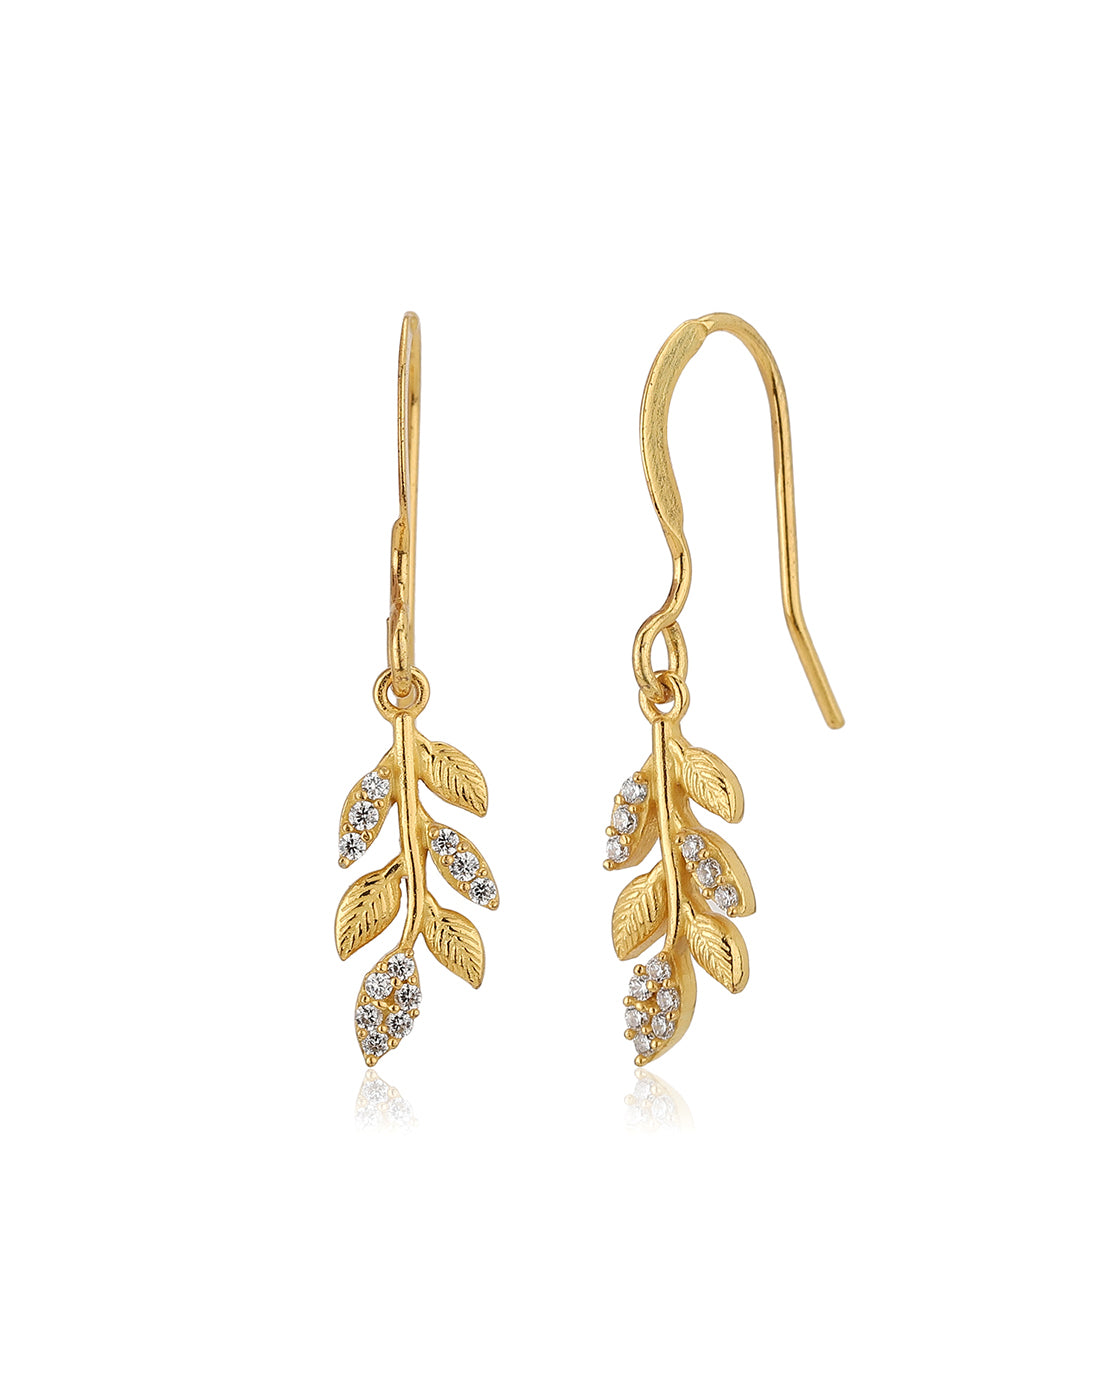 Carlton London Gold Plated Cz Leaf Drop Earring For Women